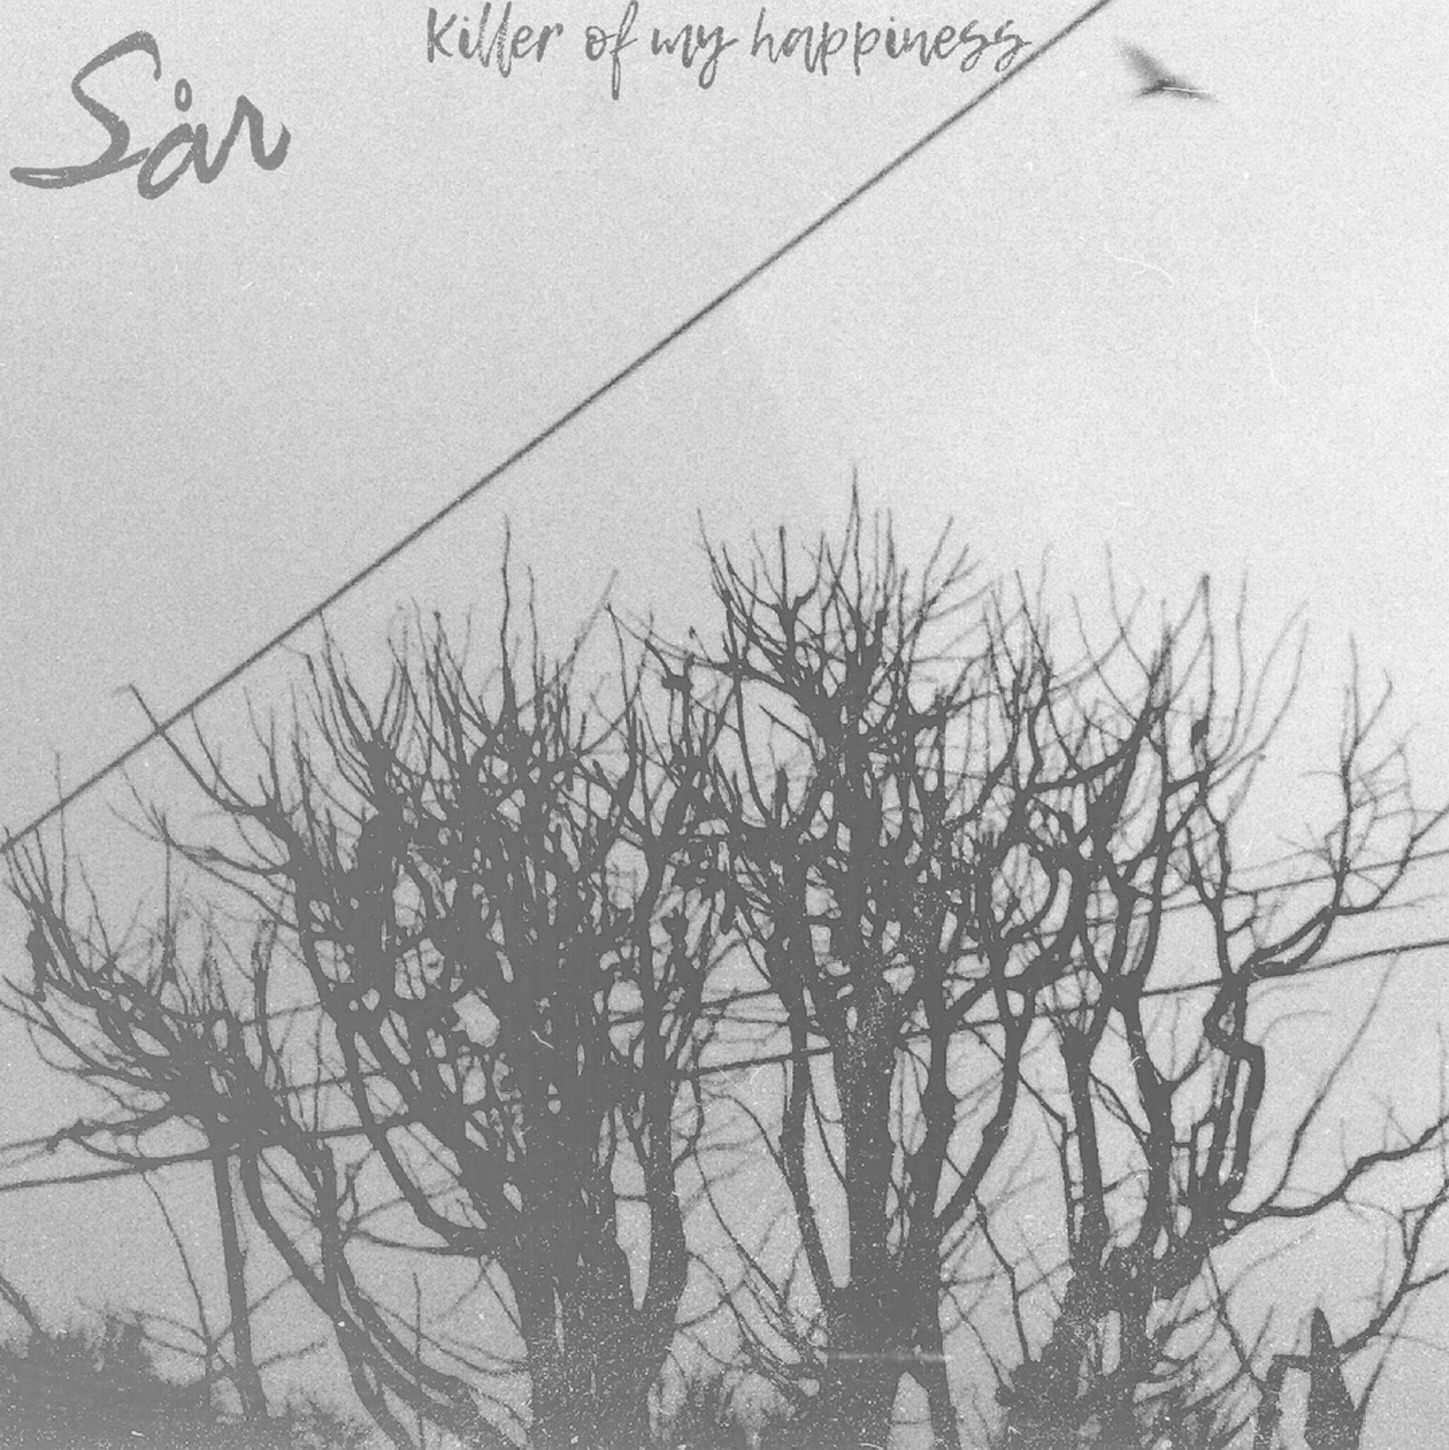 Sår - Killer Of My Happiness (2019)